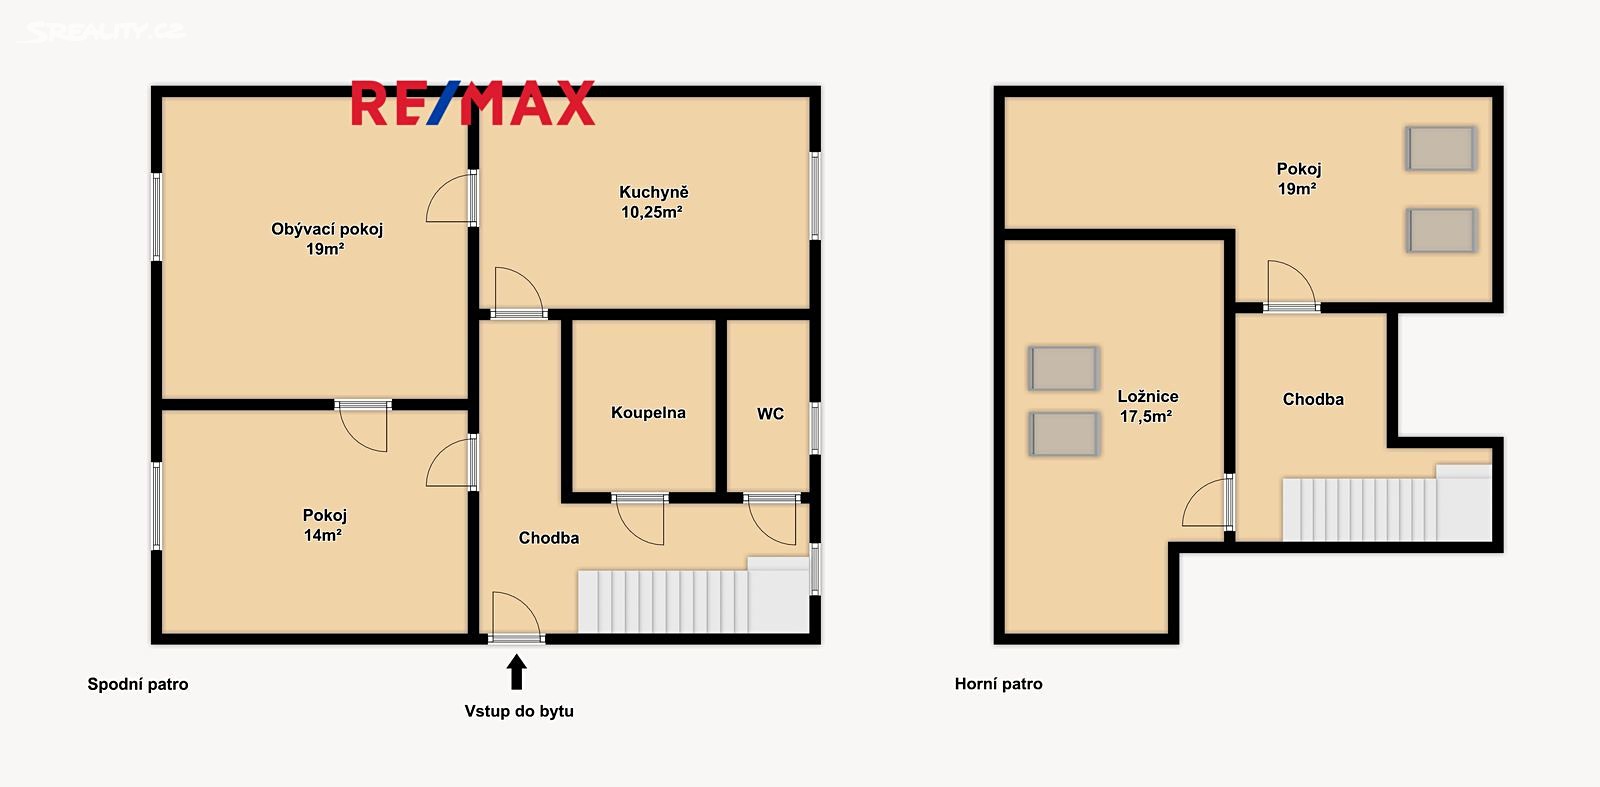 Pronájem bytu 4+1 110 m² (Mezonet), Meluzínova, Brno - Židenice